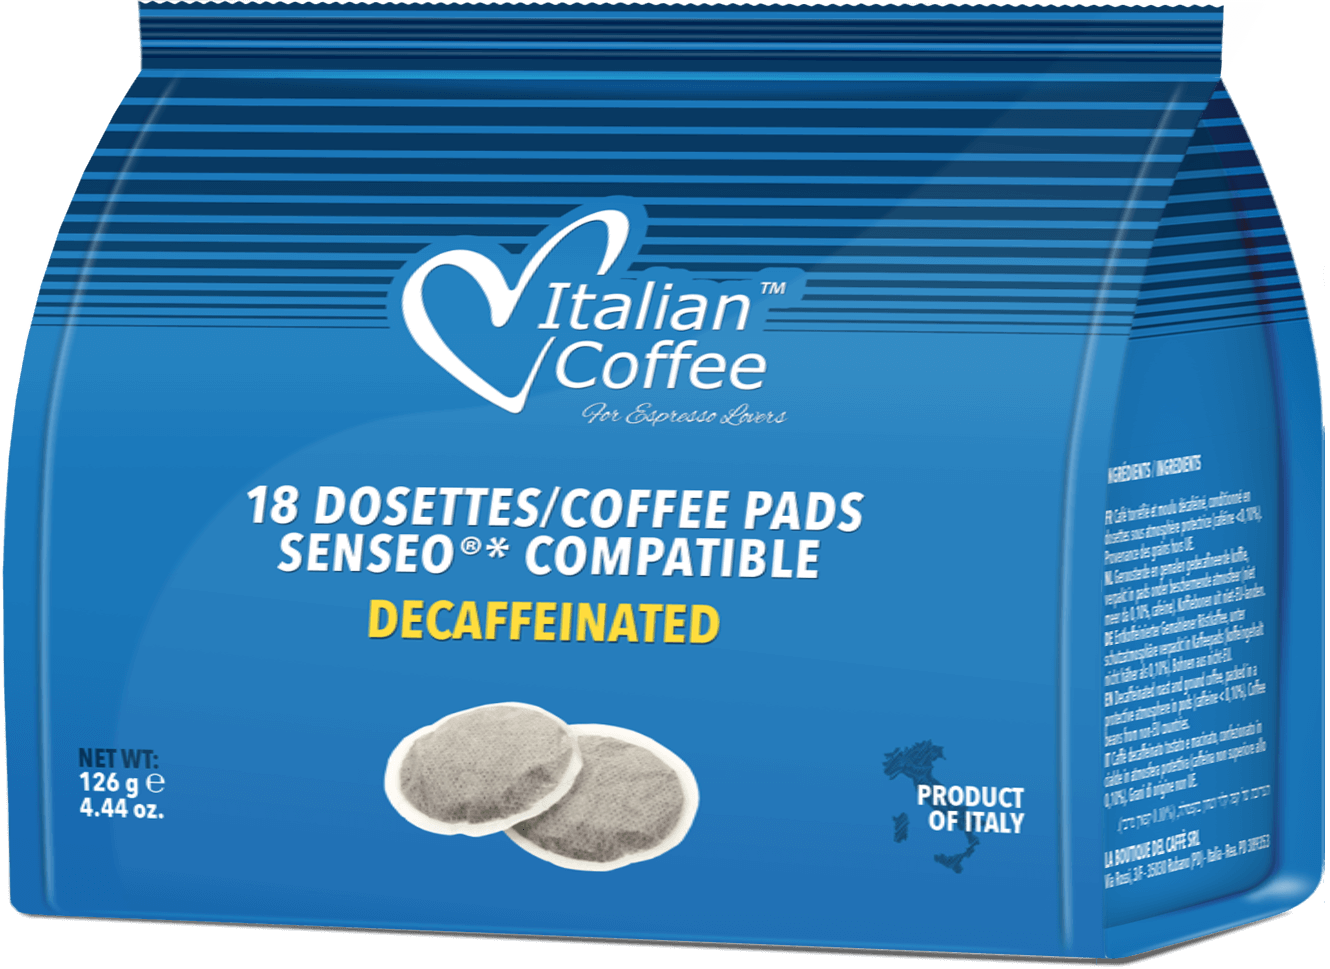 ITALIAN COFFEE® Senseo Decaffeinated